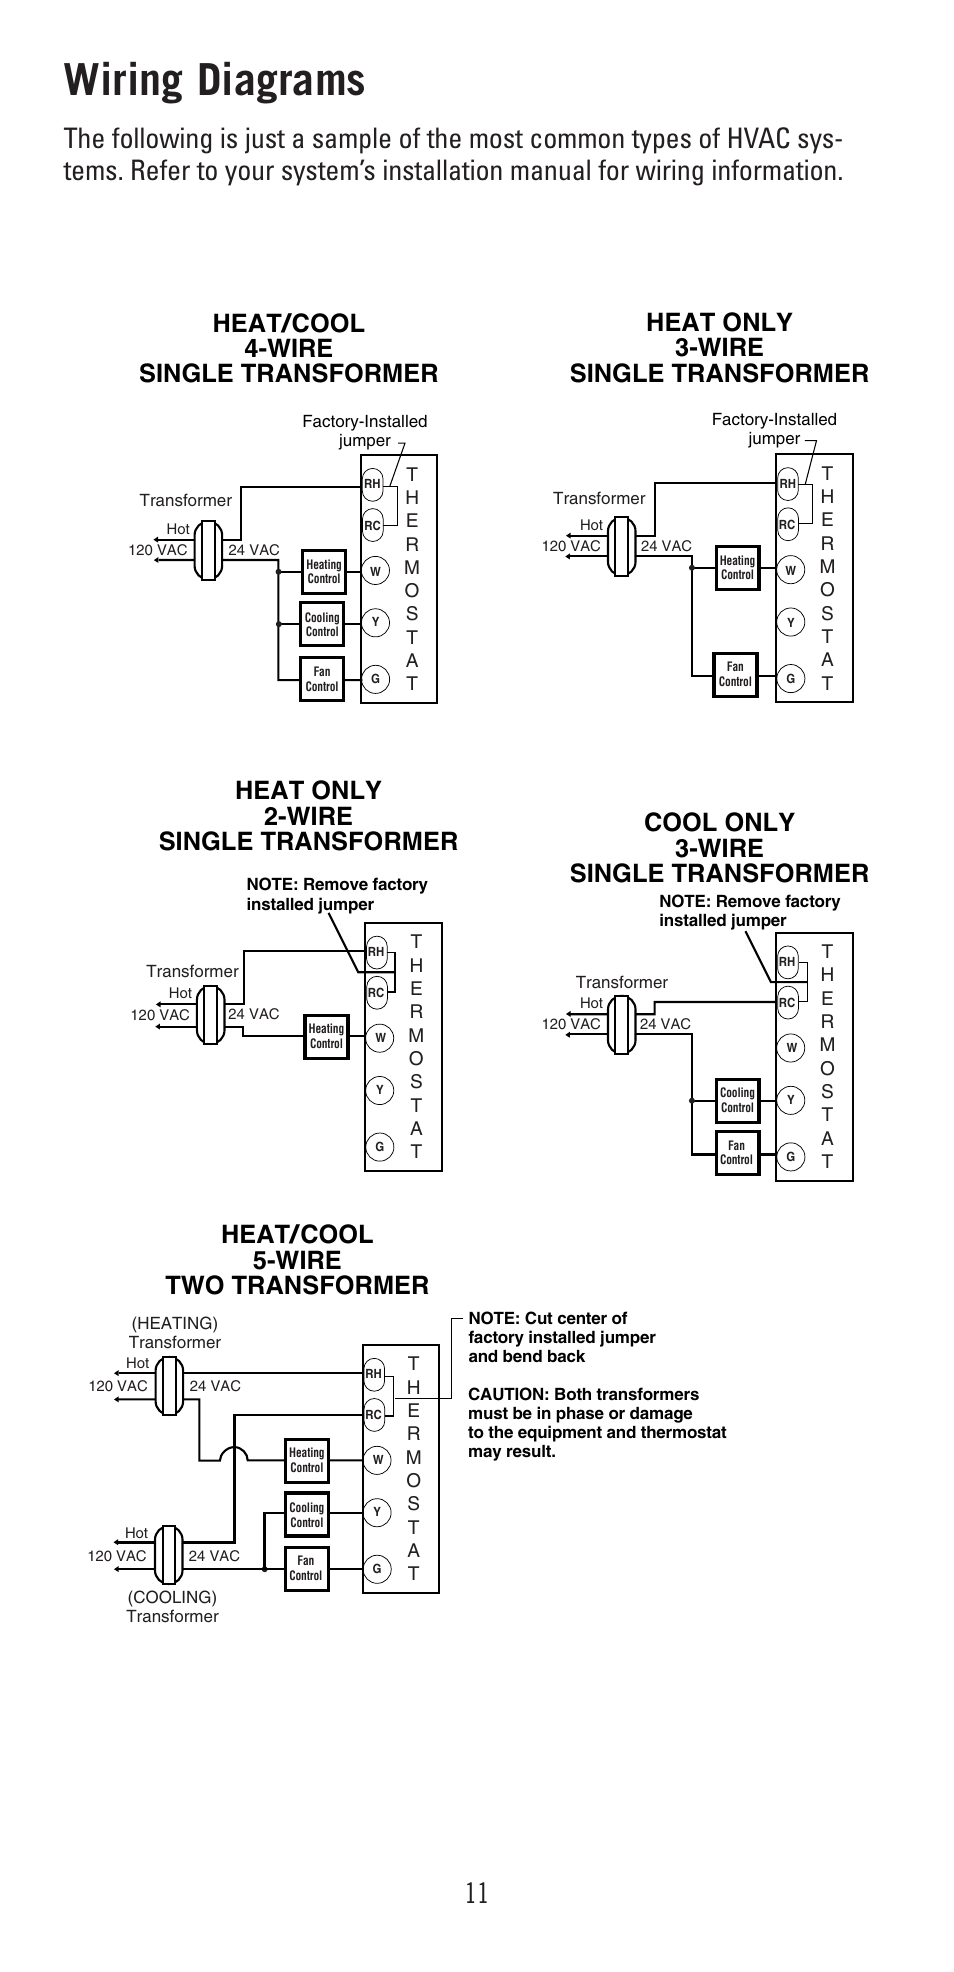 Wiring diagrams | Robertshaw 9600 User Manual | Page 11 / 12